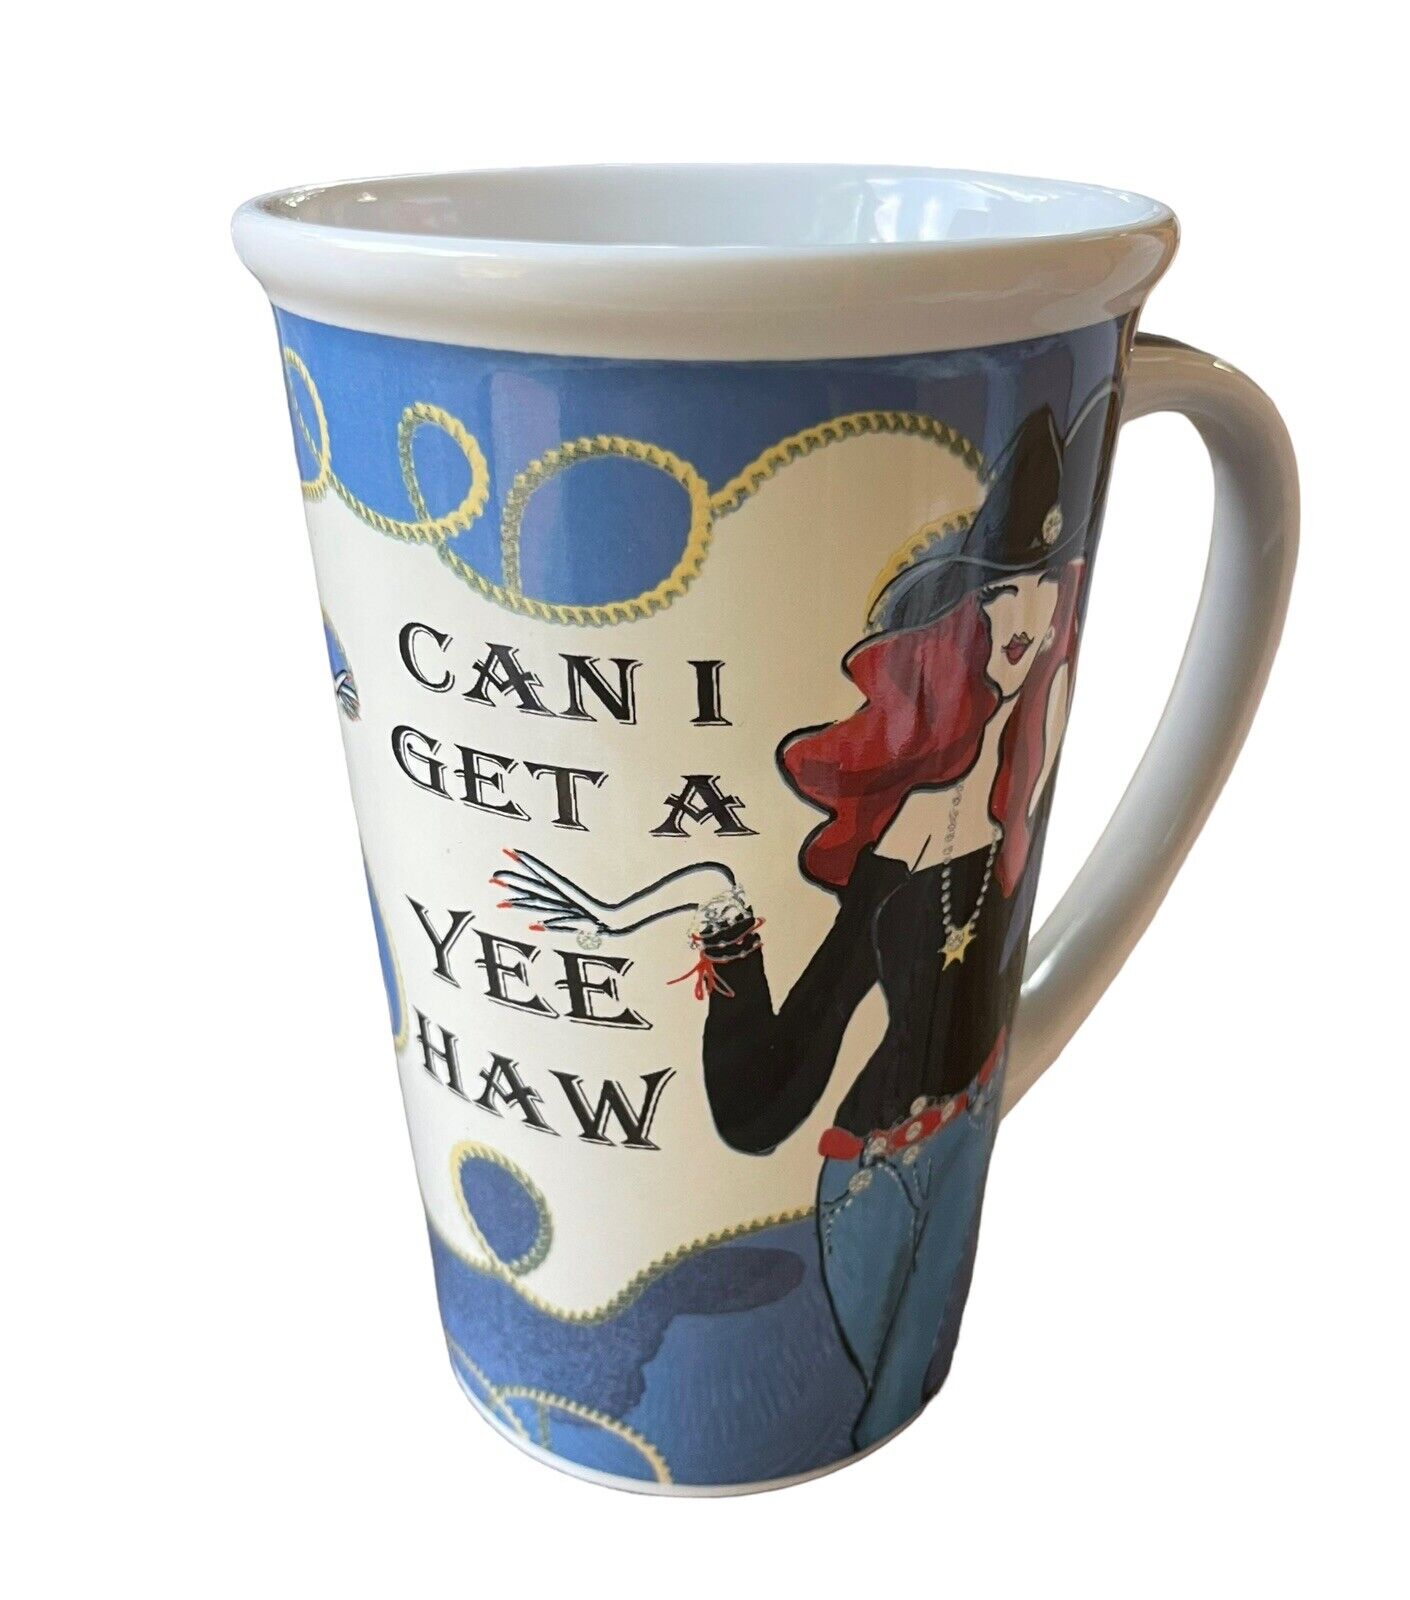 Can I Get a Yee Haw Tall Coffee Mug 20 oz - Working Girls Design - Cow Girl Cup